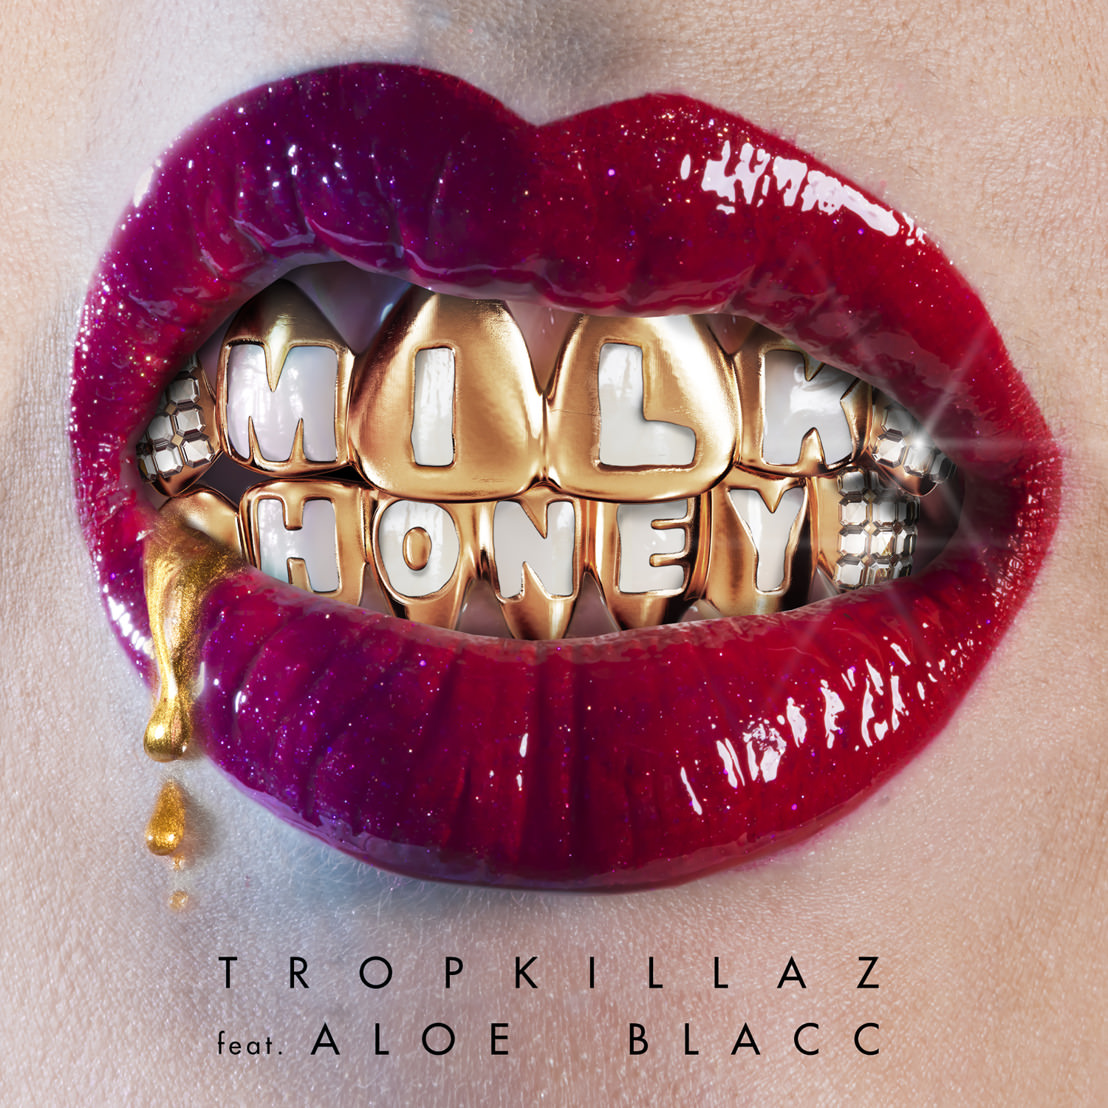 Tropkillaz releases Milk & Honey featuring Aloe Blacc